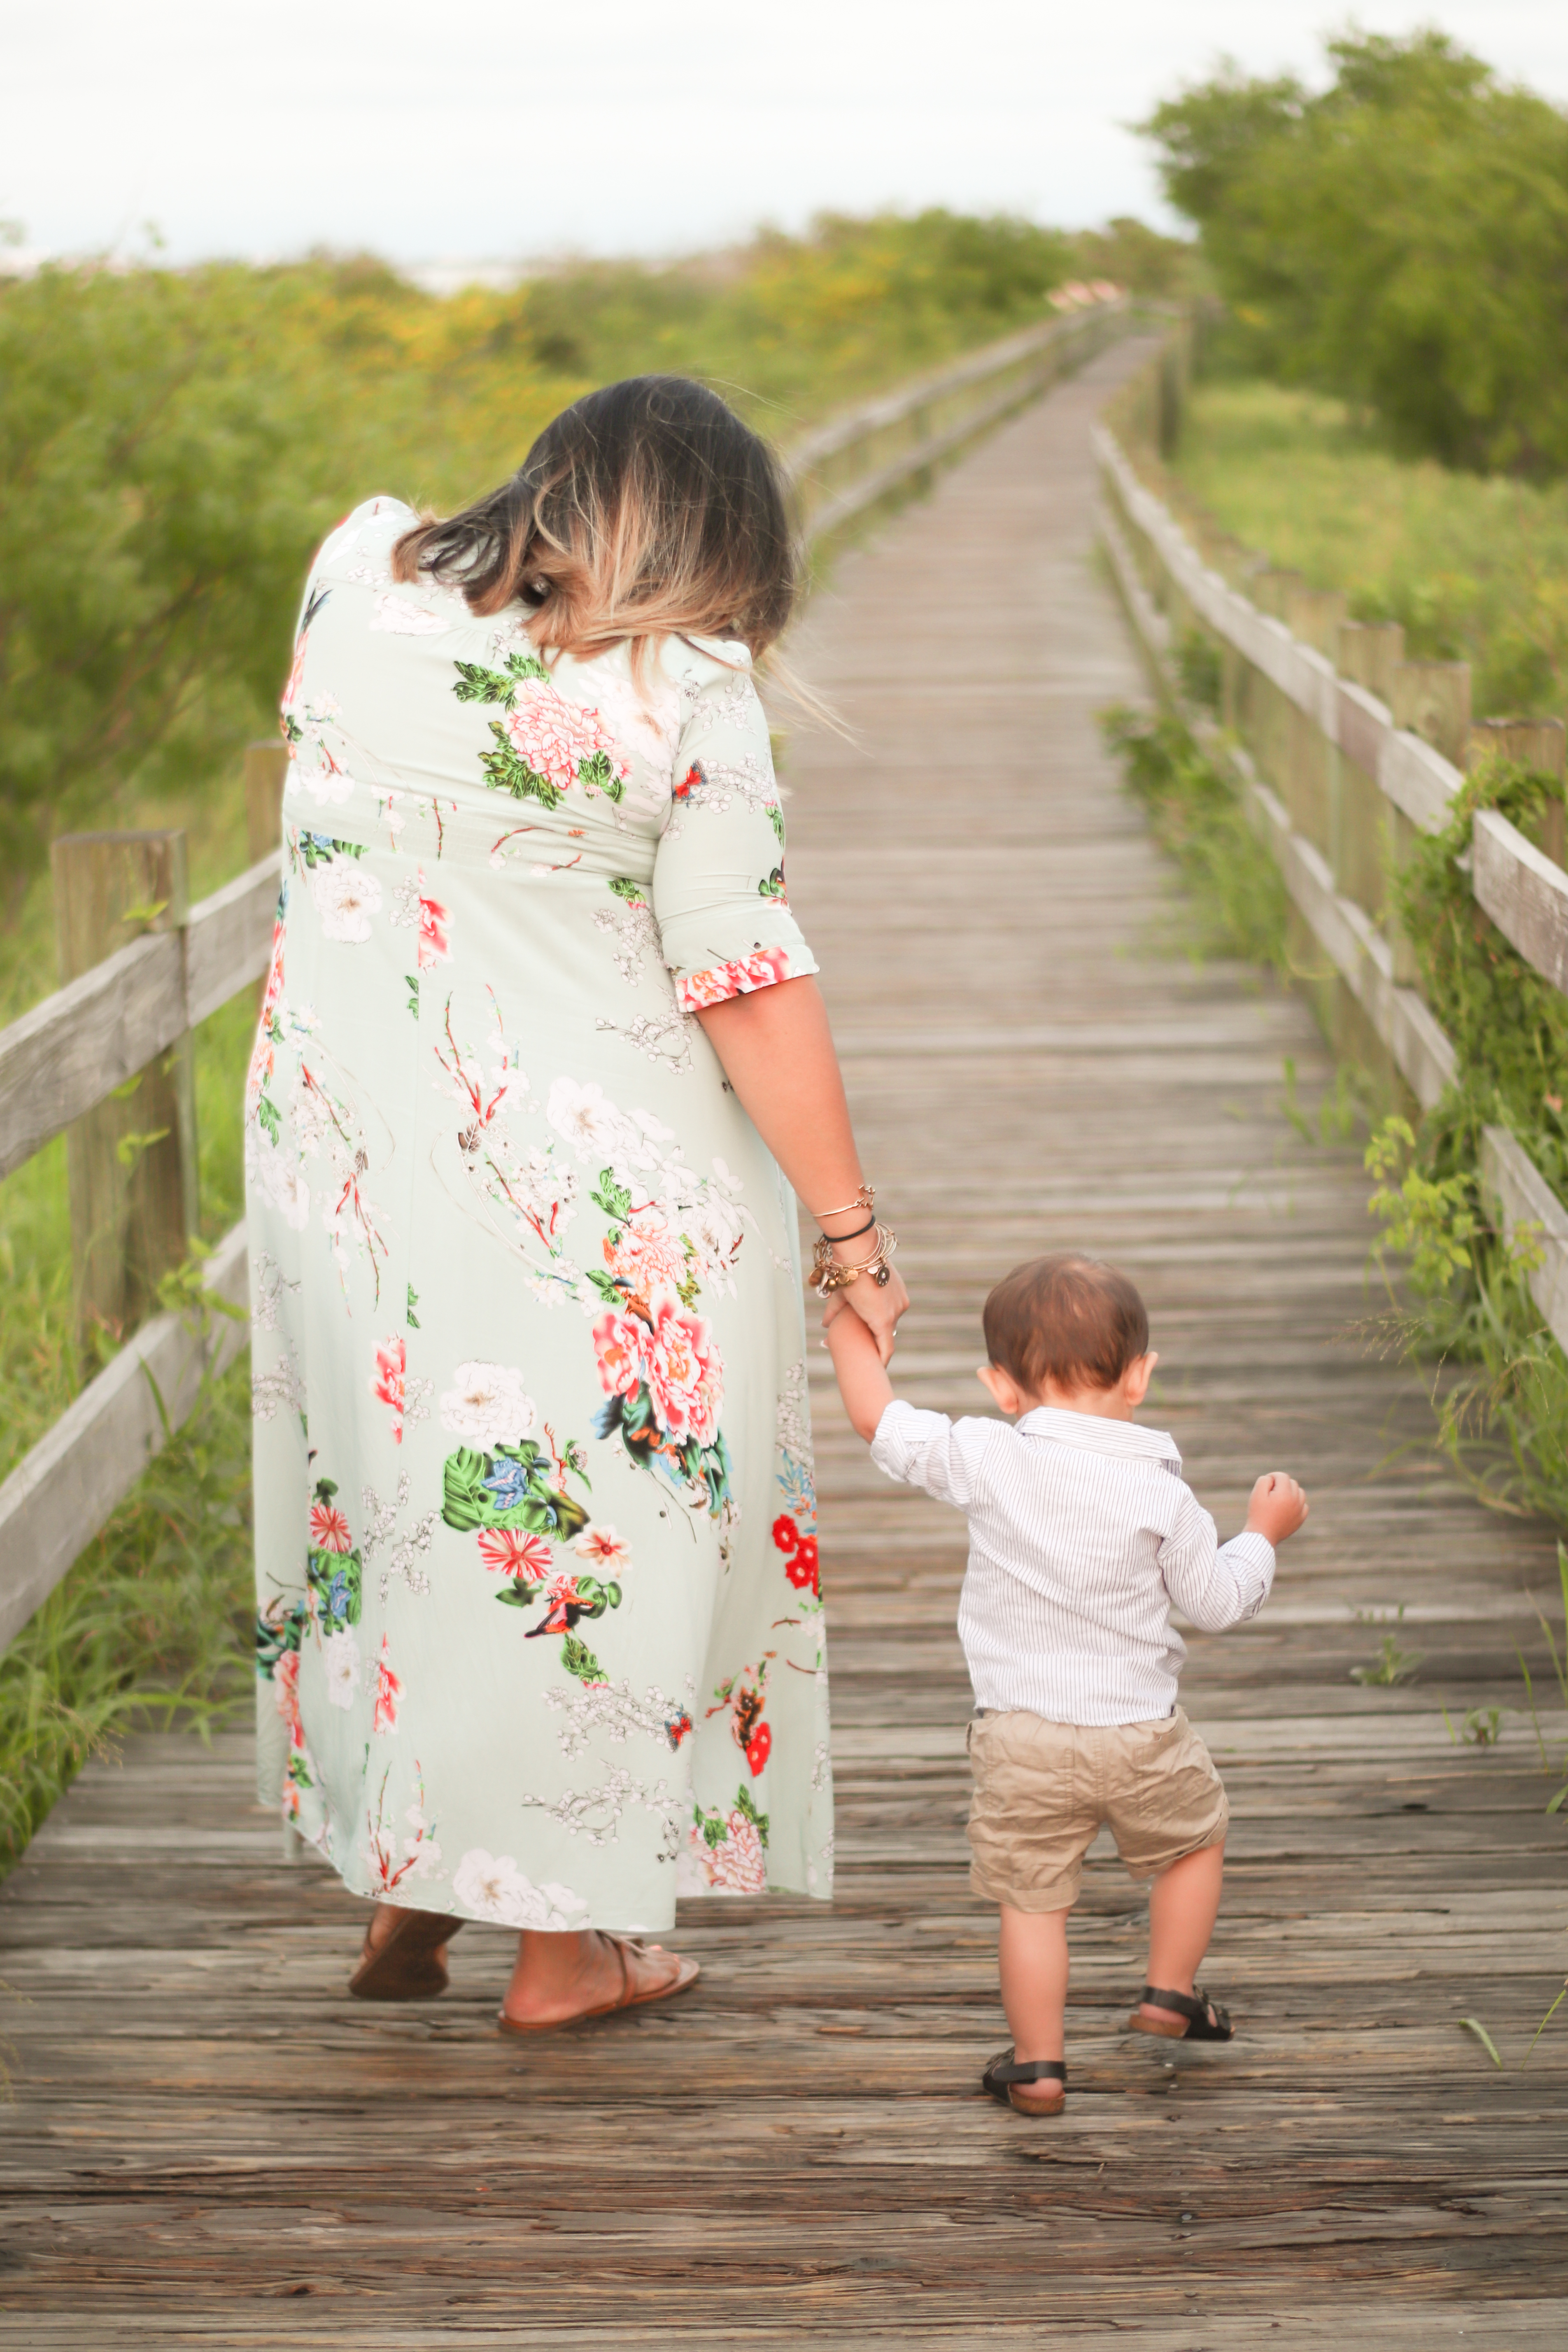 10 Wishes for My Children : Corpus Christi Moms Blog